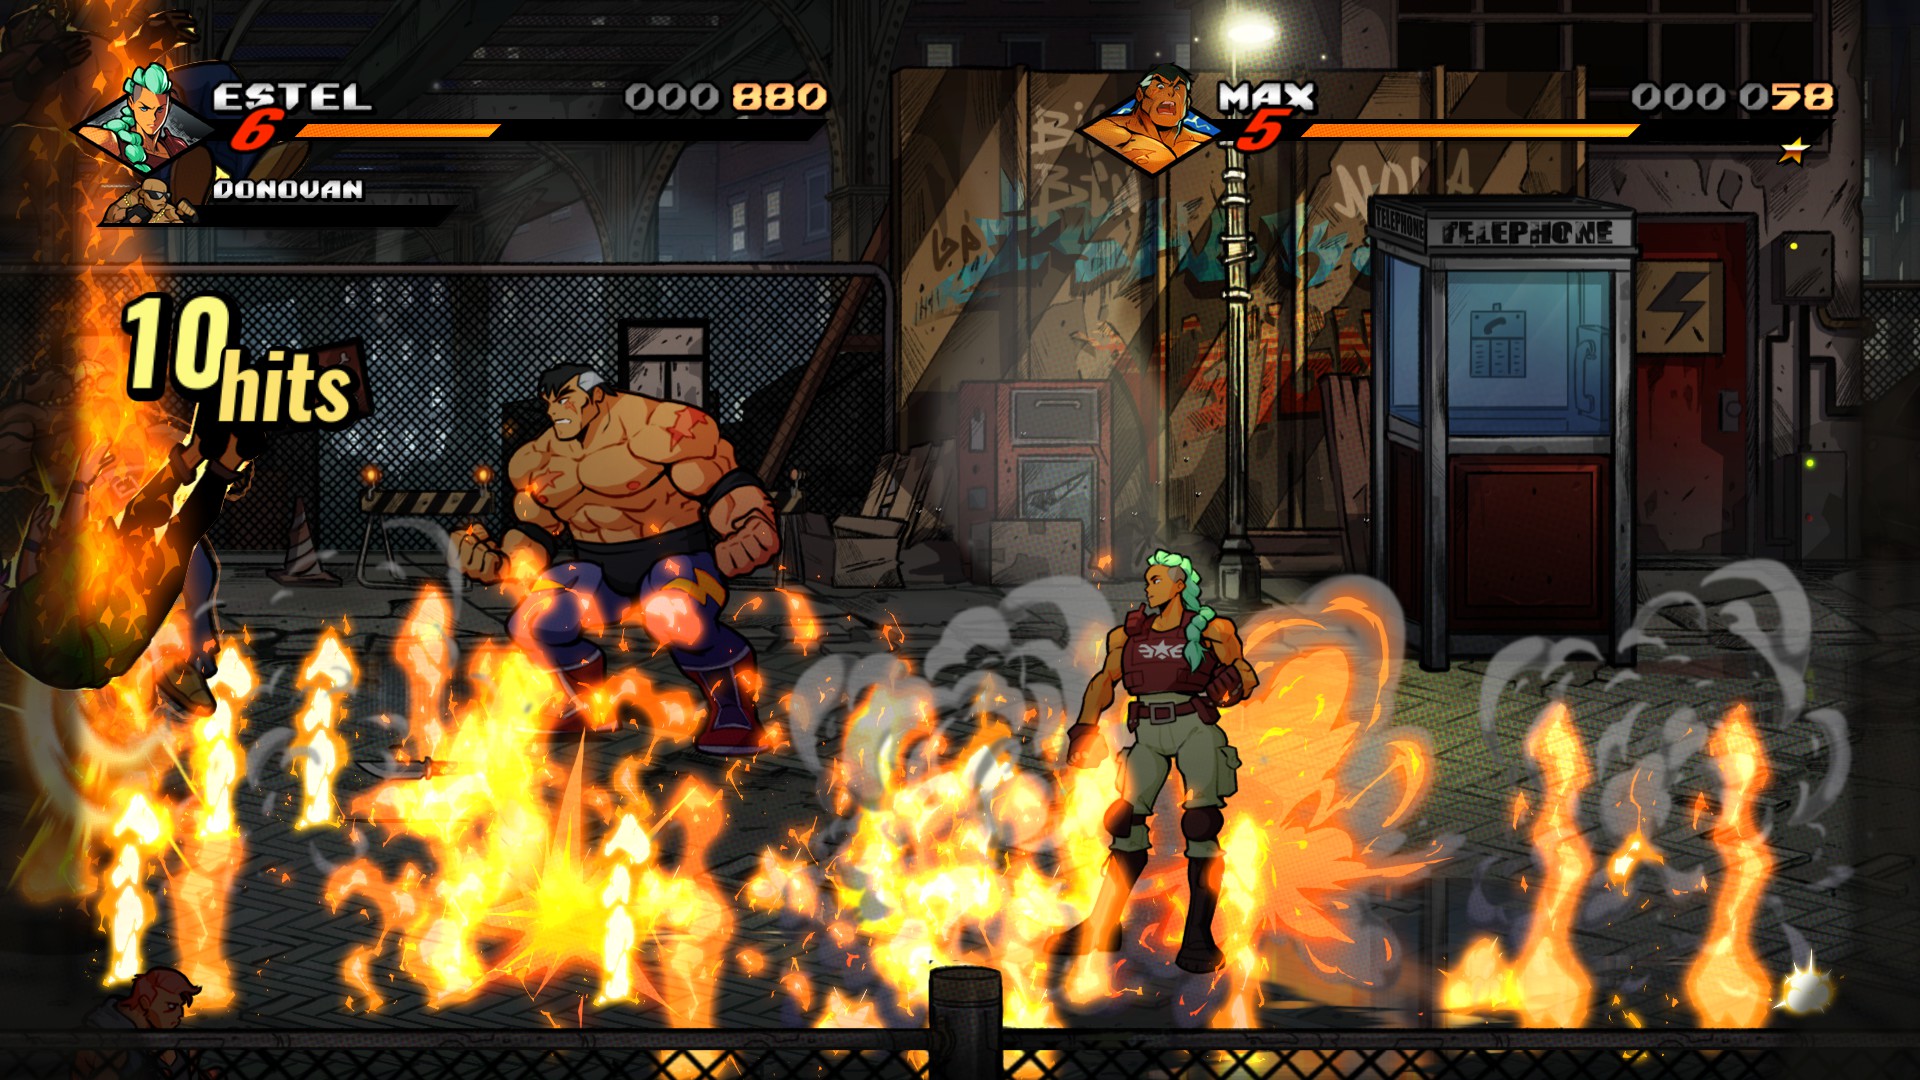 Streets Of Rage 4 - Mr. X Nightmare on Steam